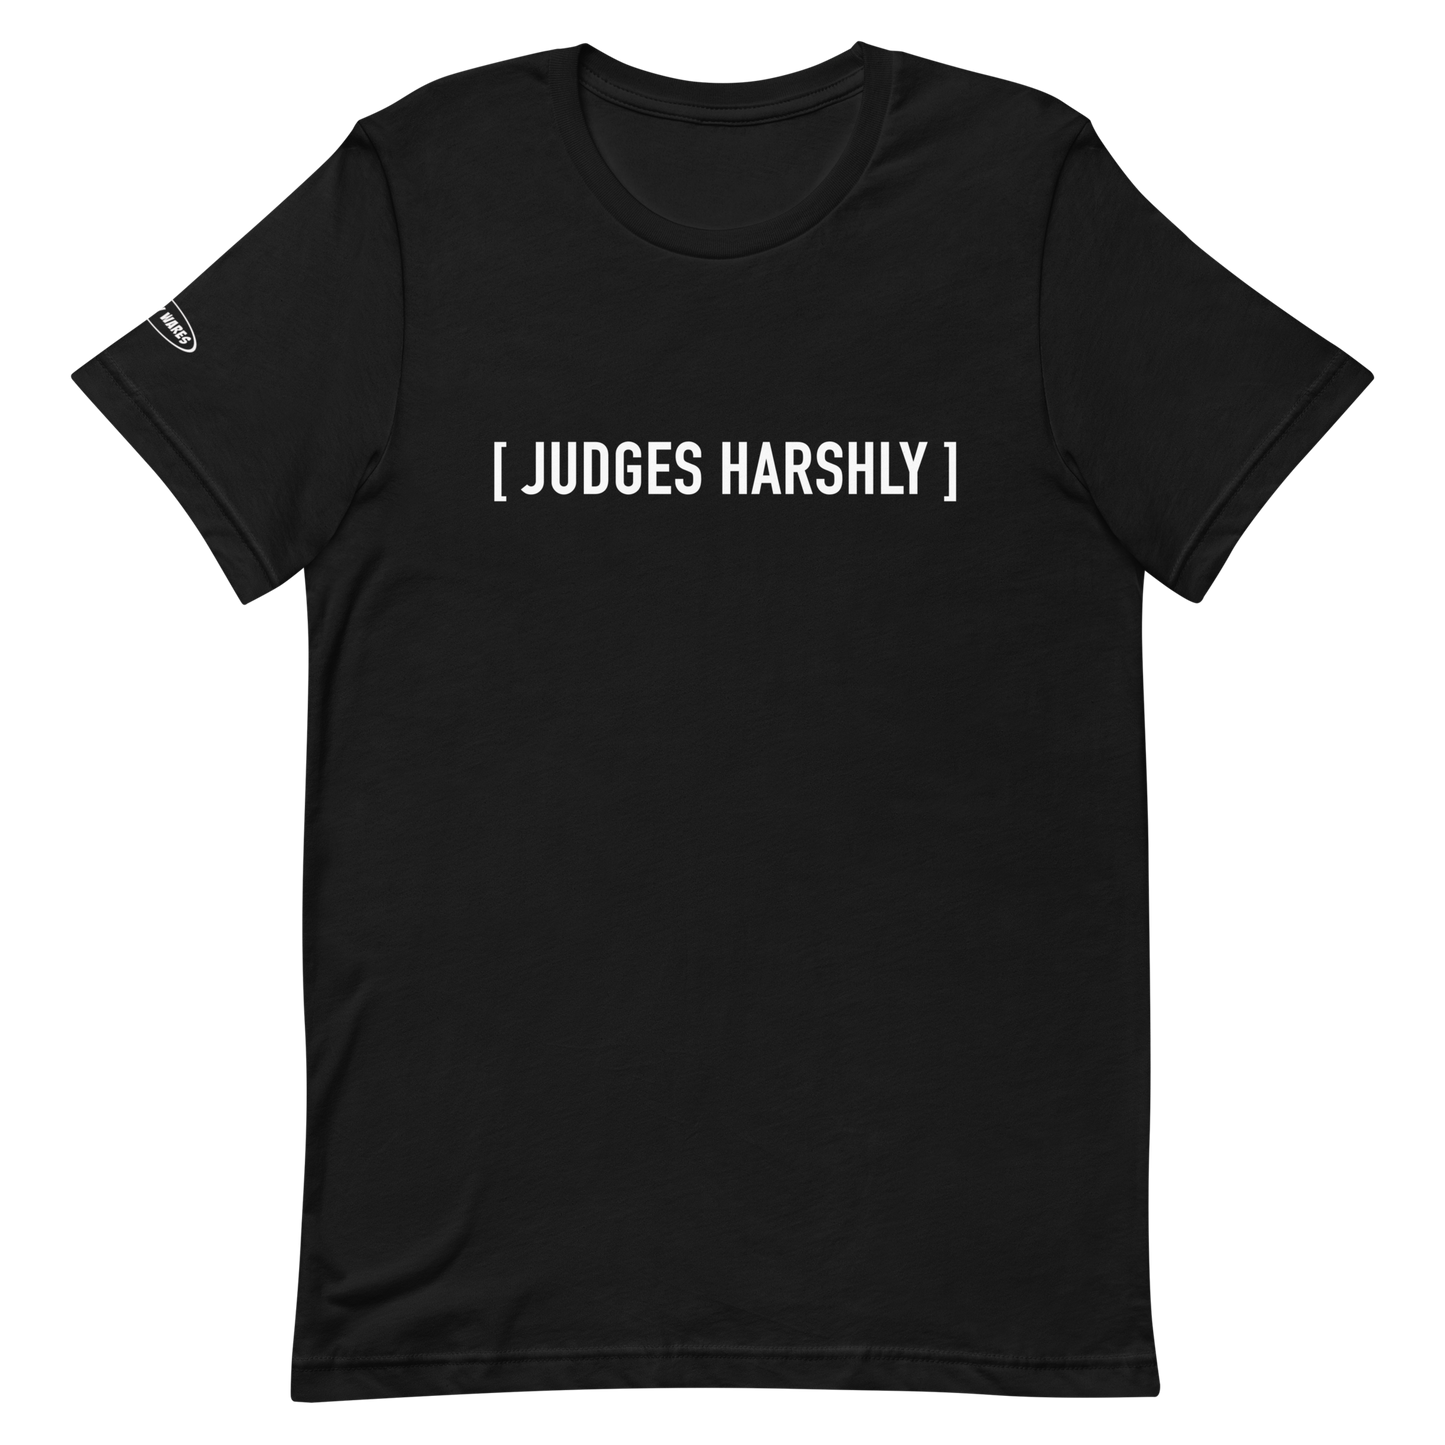 SUBTITLE - [Judges Harshly] - Funny T-Shirt